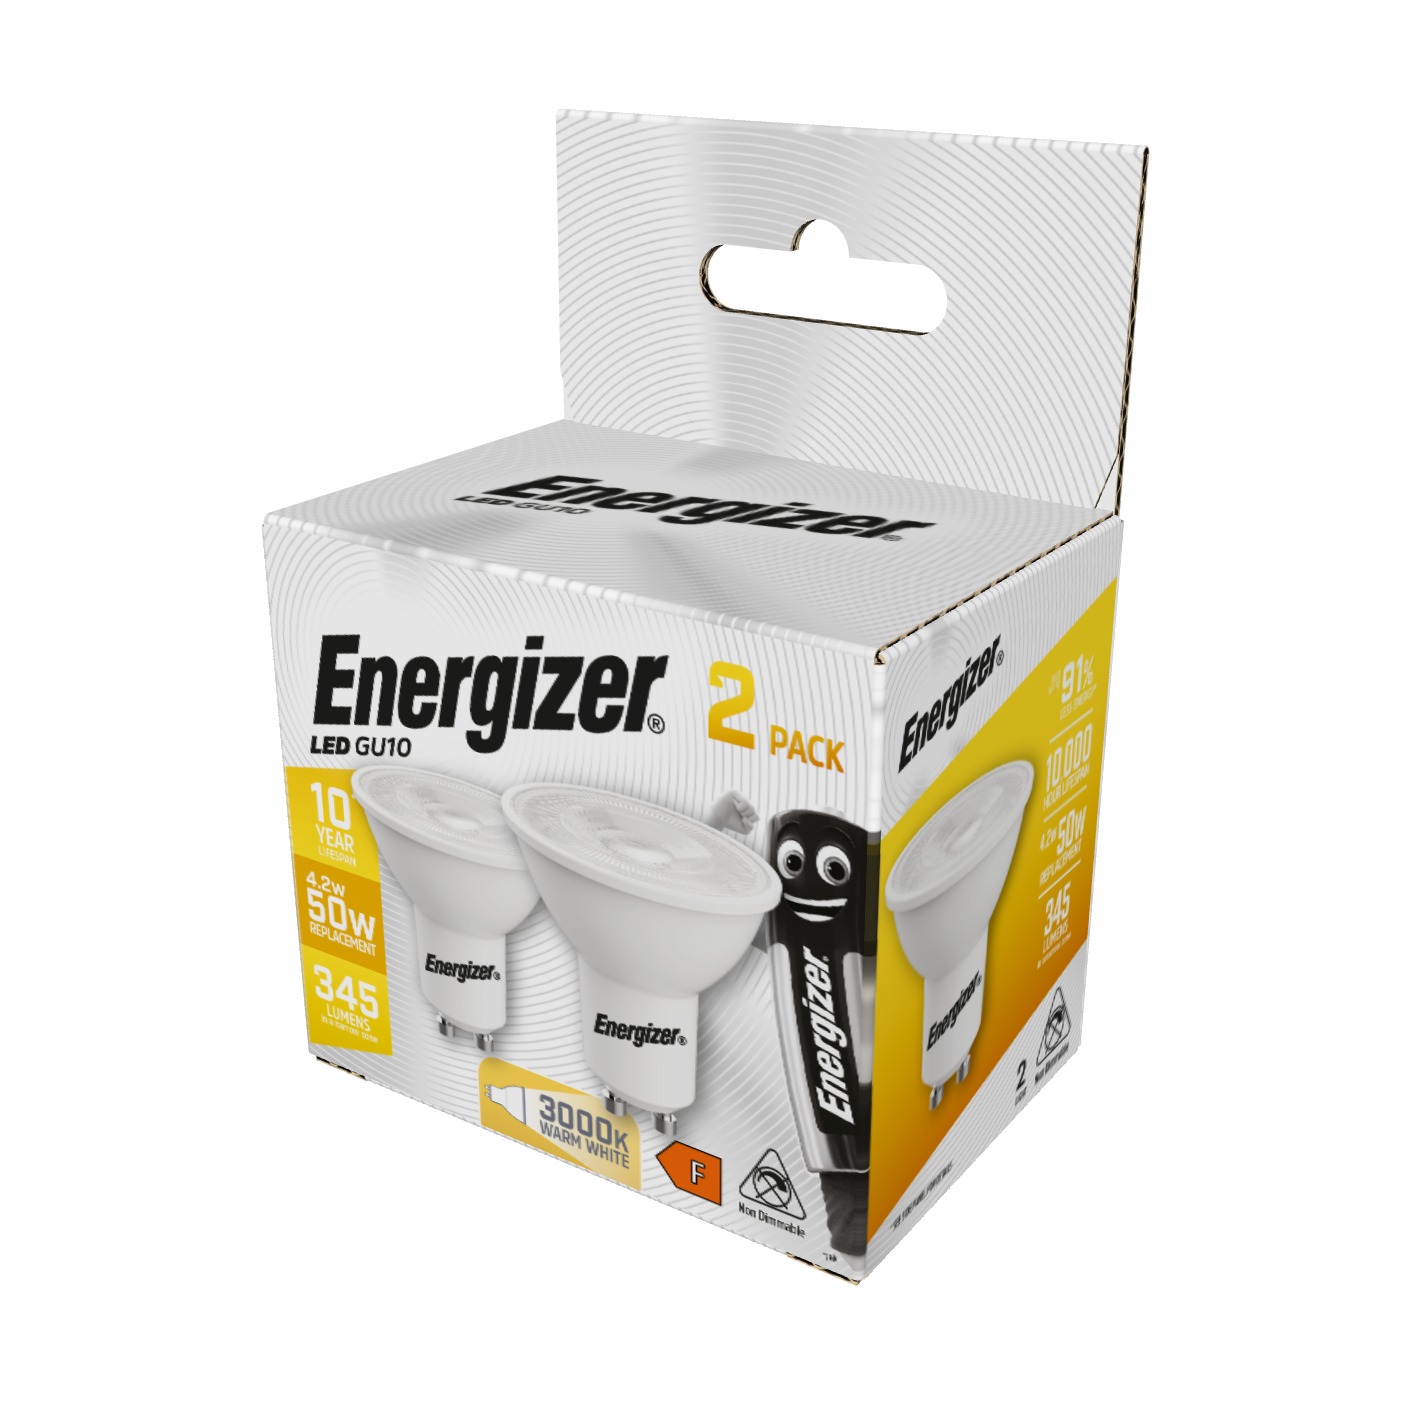 Energizer LED GU10 345lm 4.2W 3,000K (Warm White), Box of 2